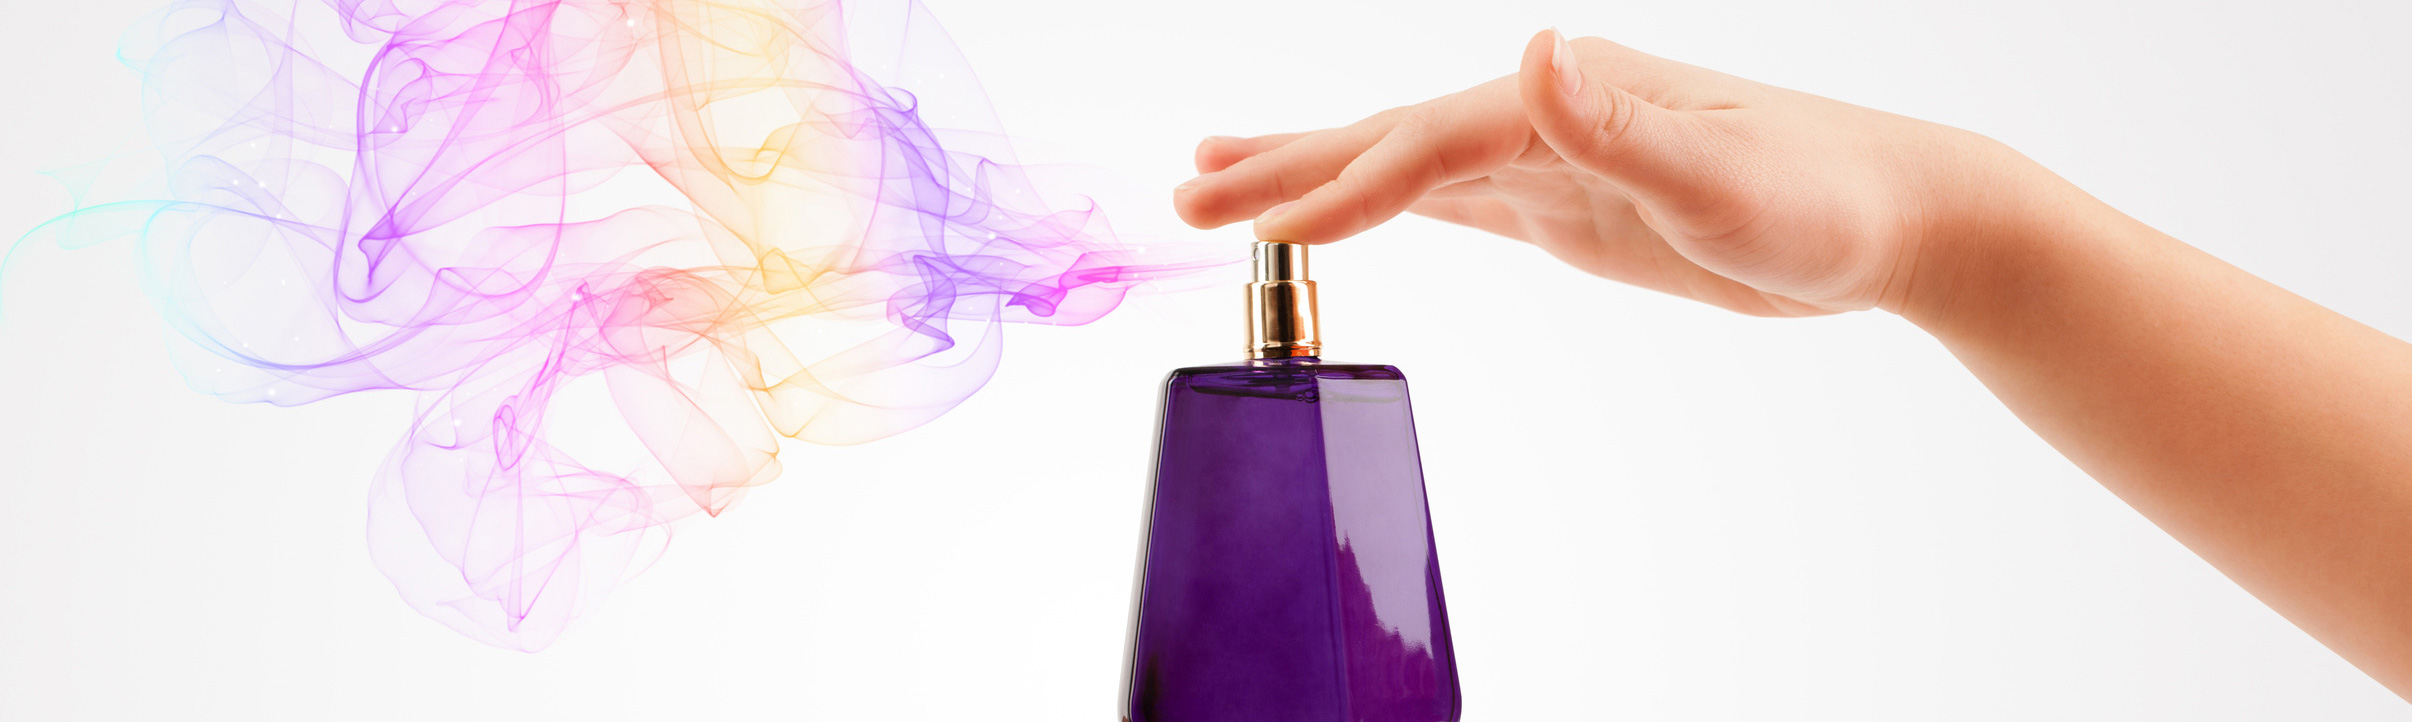 diffusion marketing olfactif